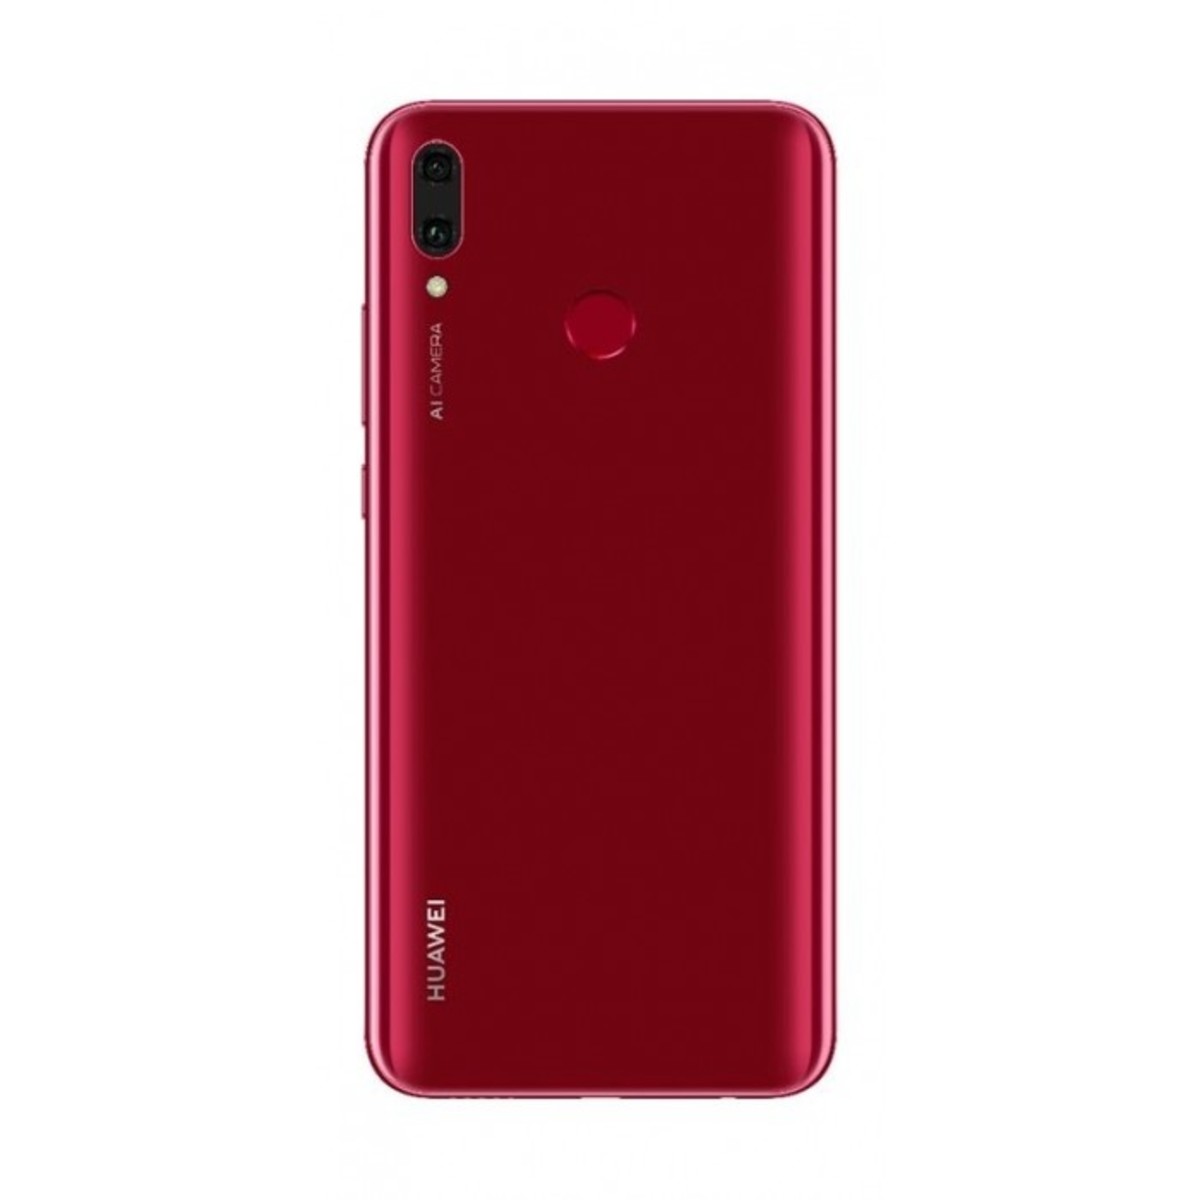 Huawei Y9-2019 64GB Red